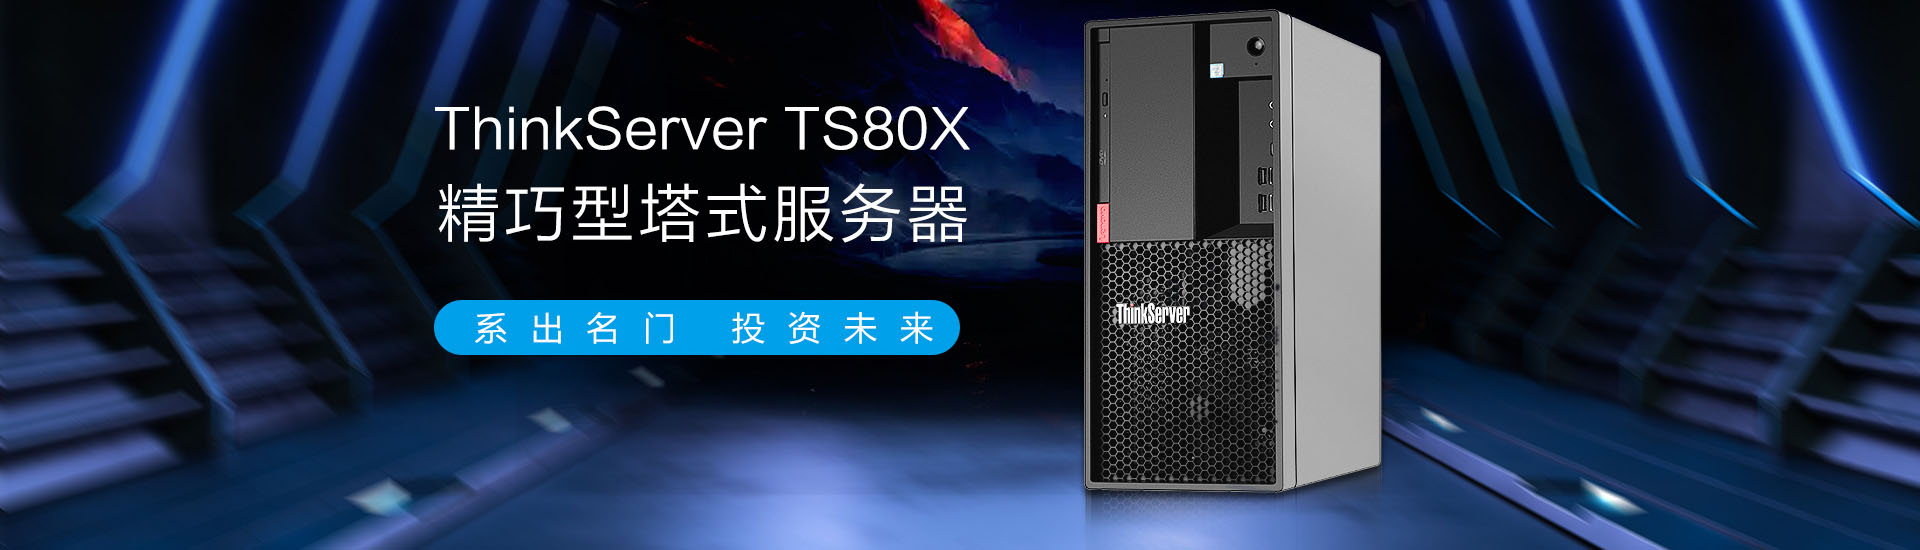 ThinkServer TS80X